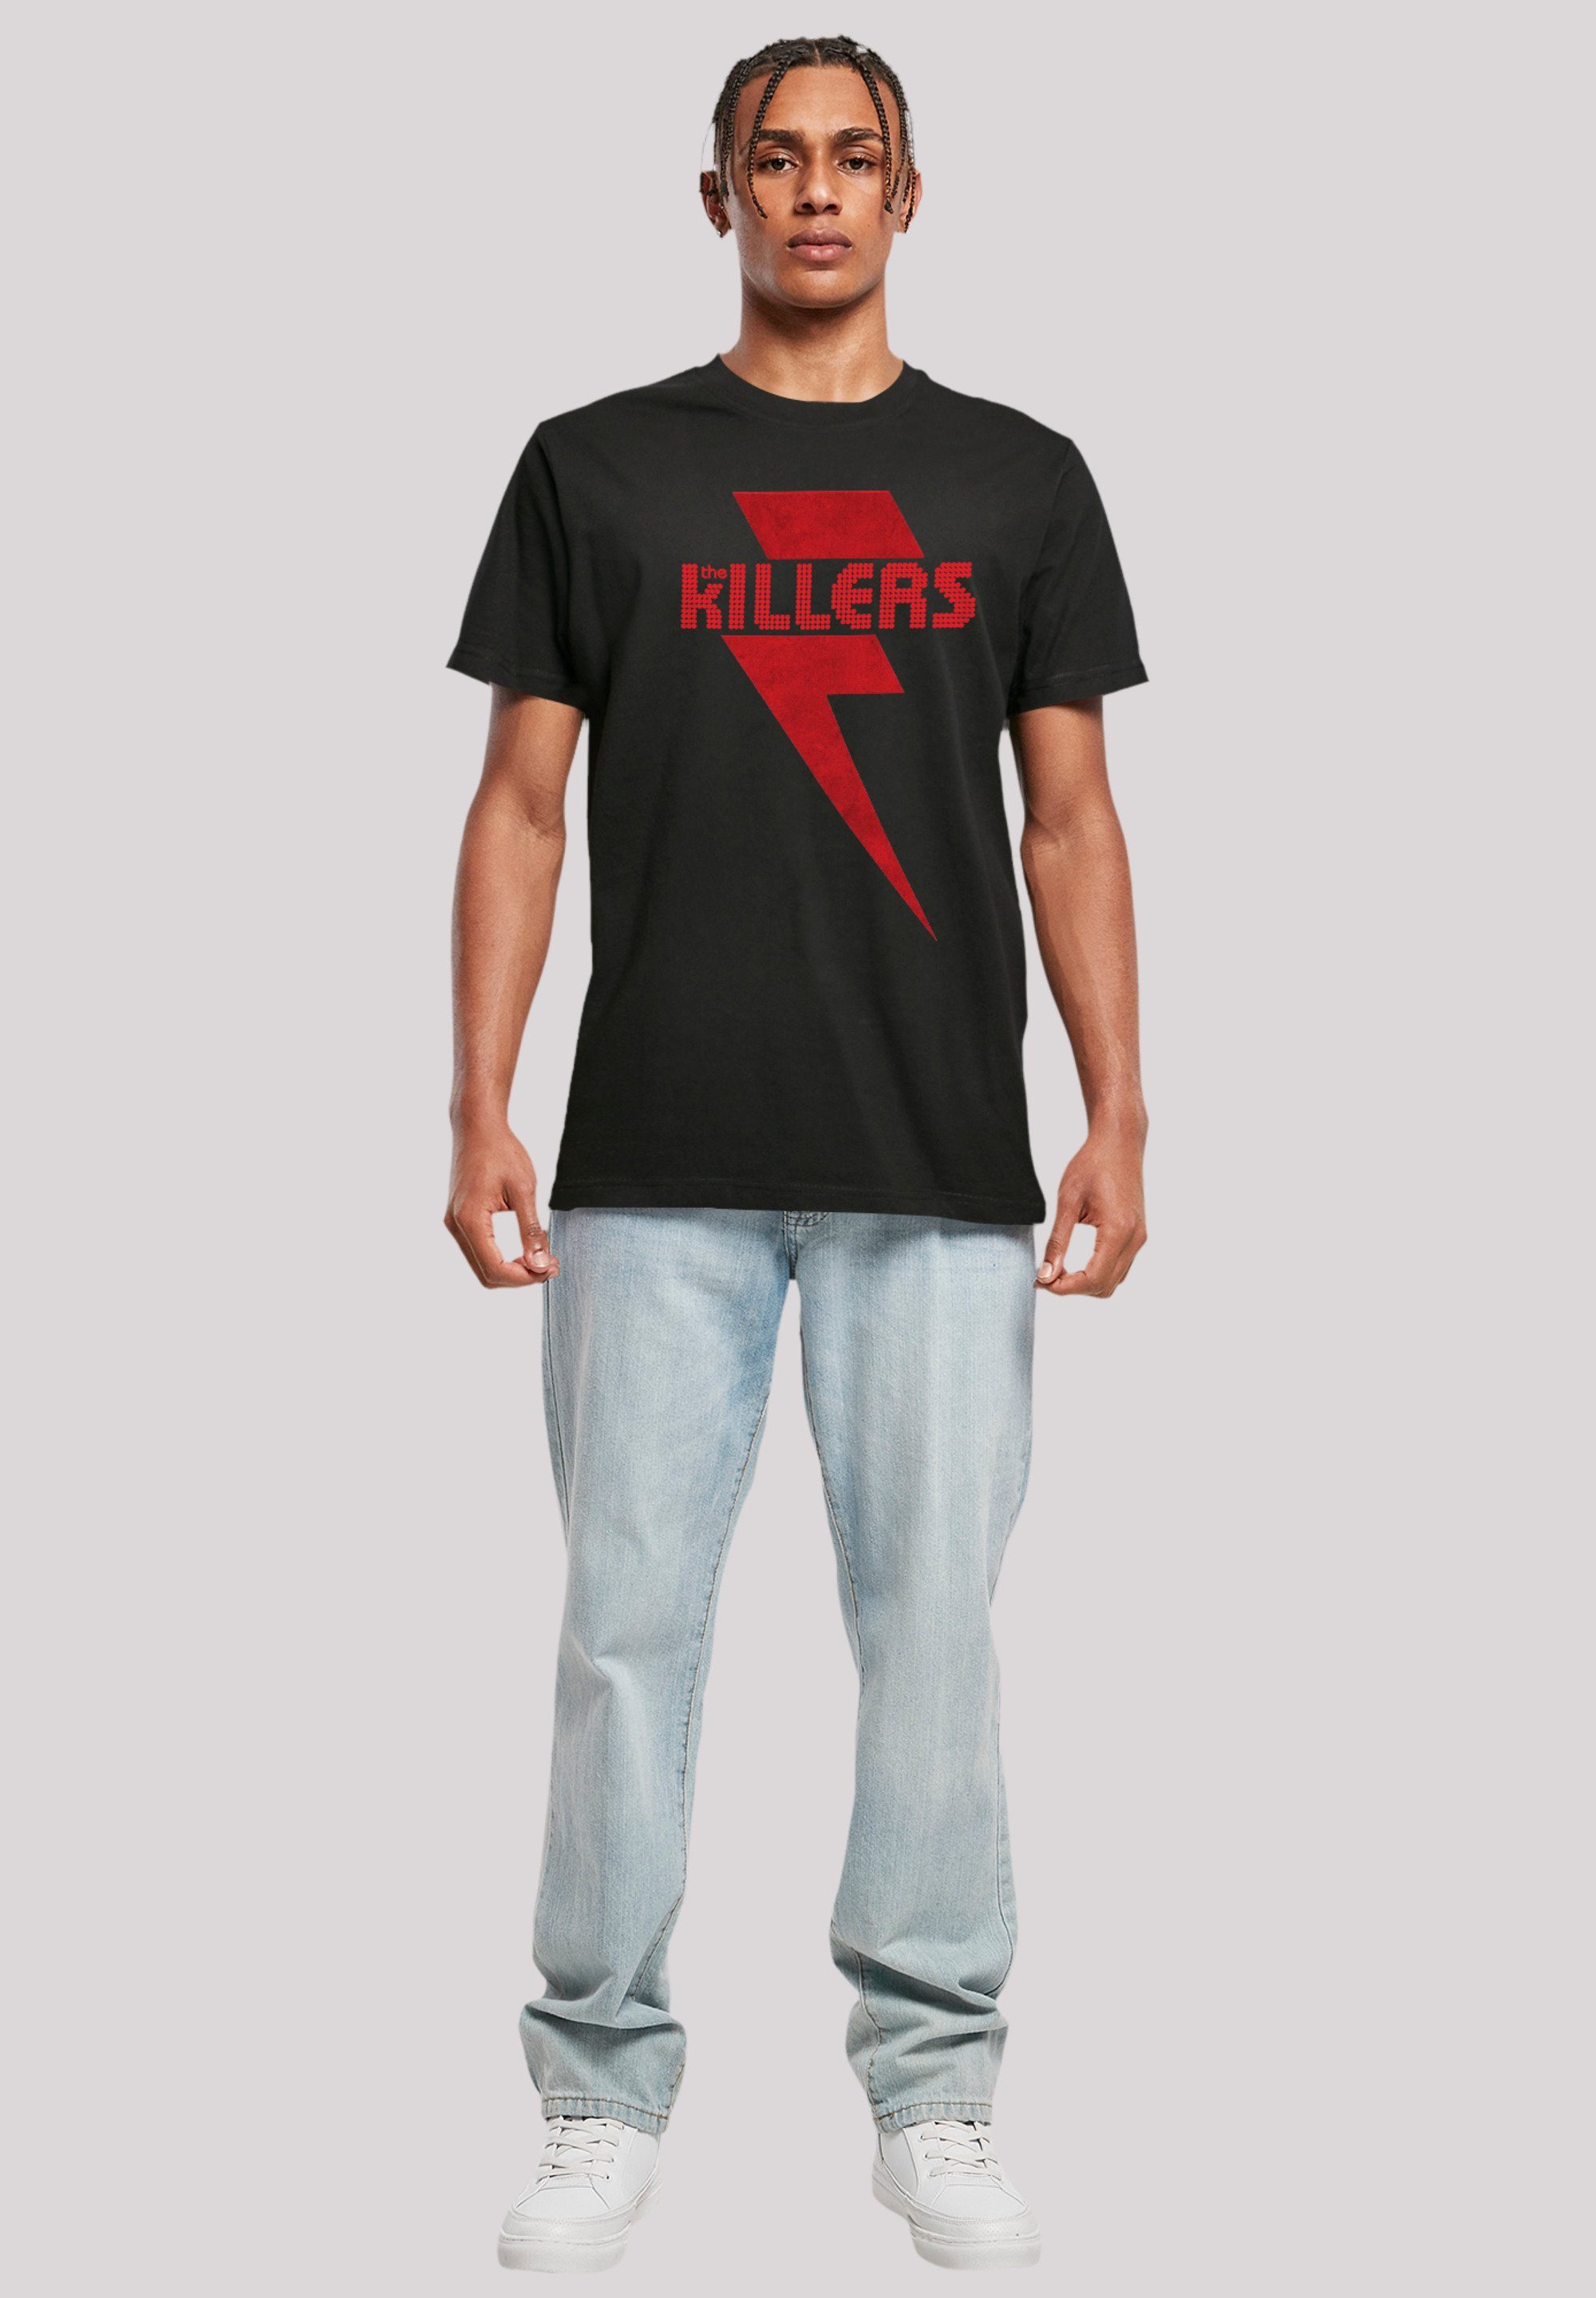 The T-Shirt Killers schwarz Bolt Print F4NT4STIC Red